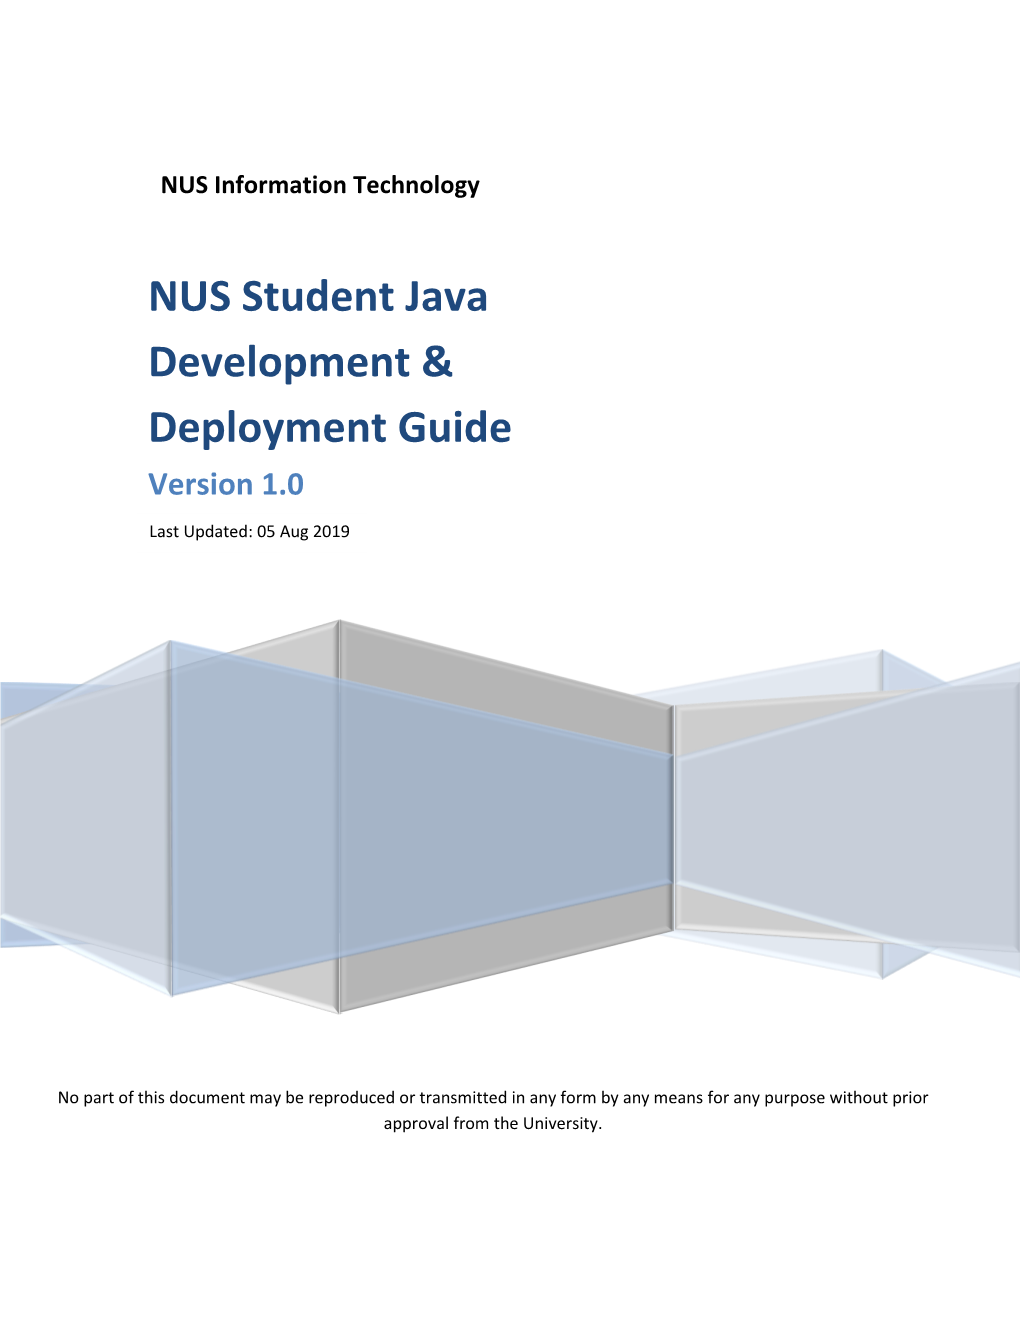 Java Development & Deployment Guide Version 1.0